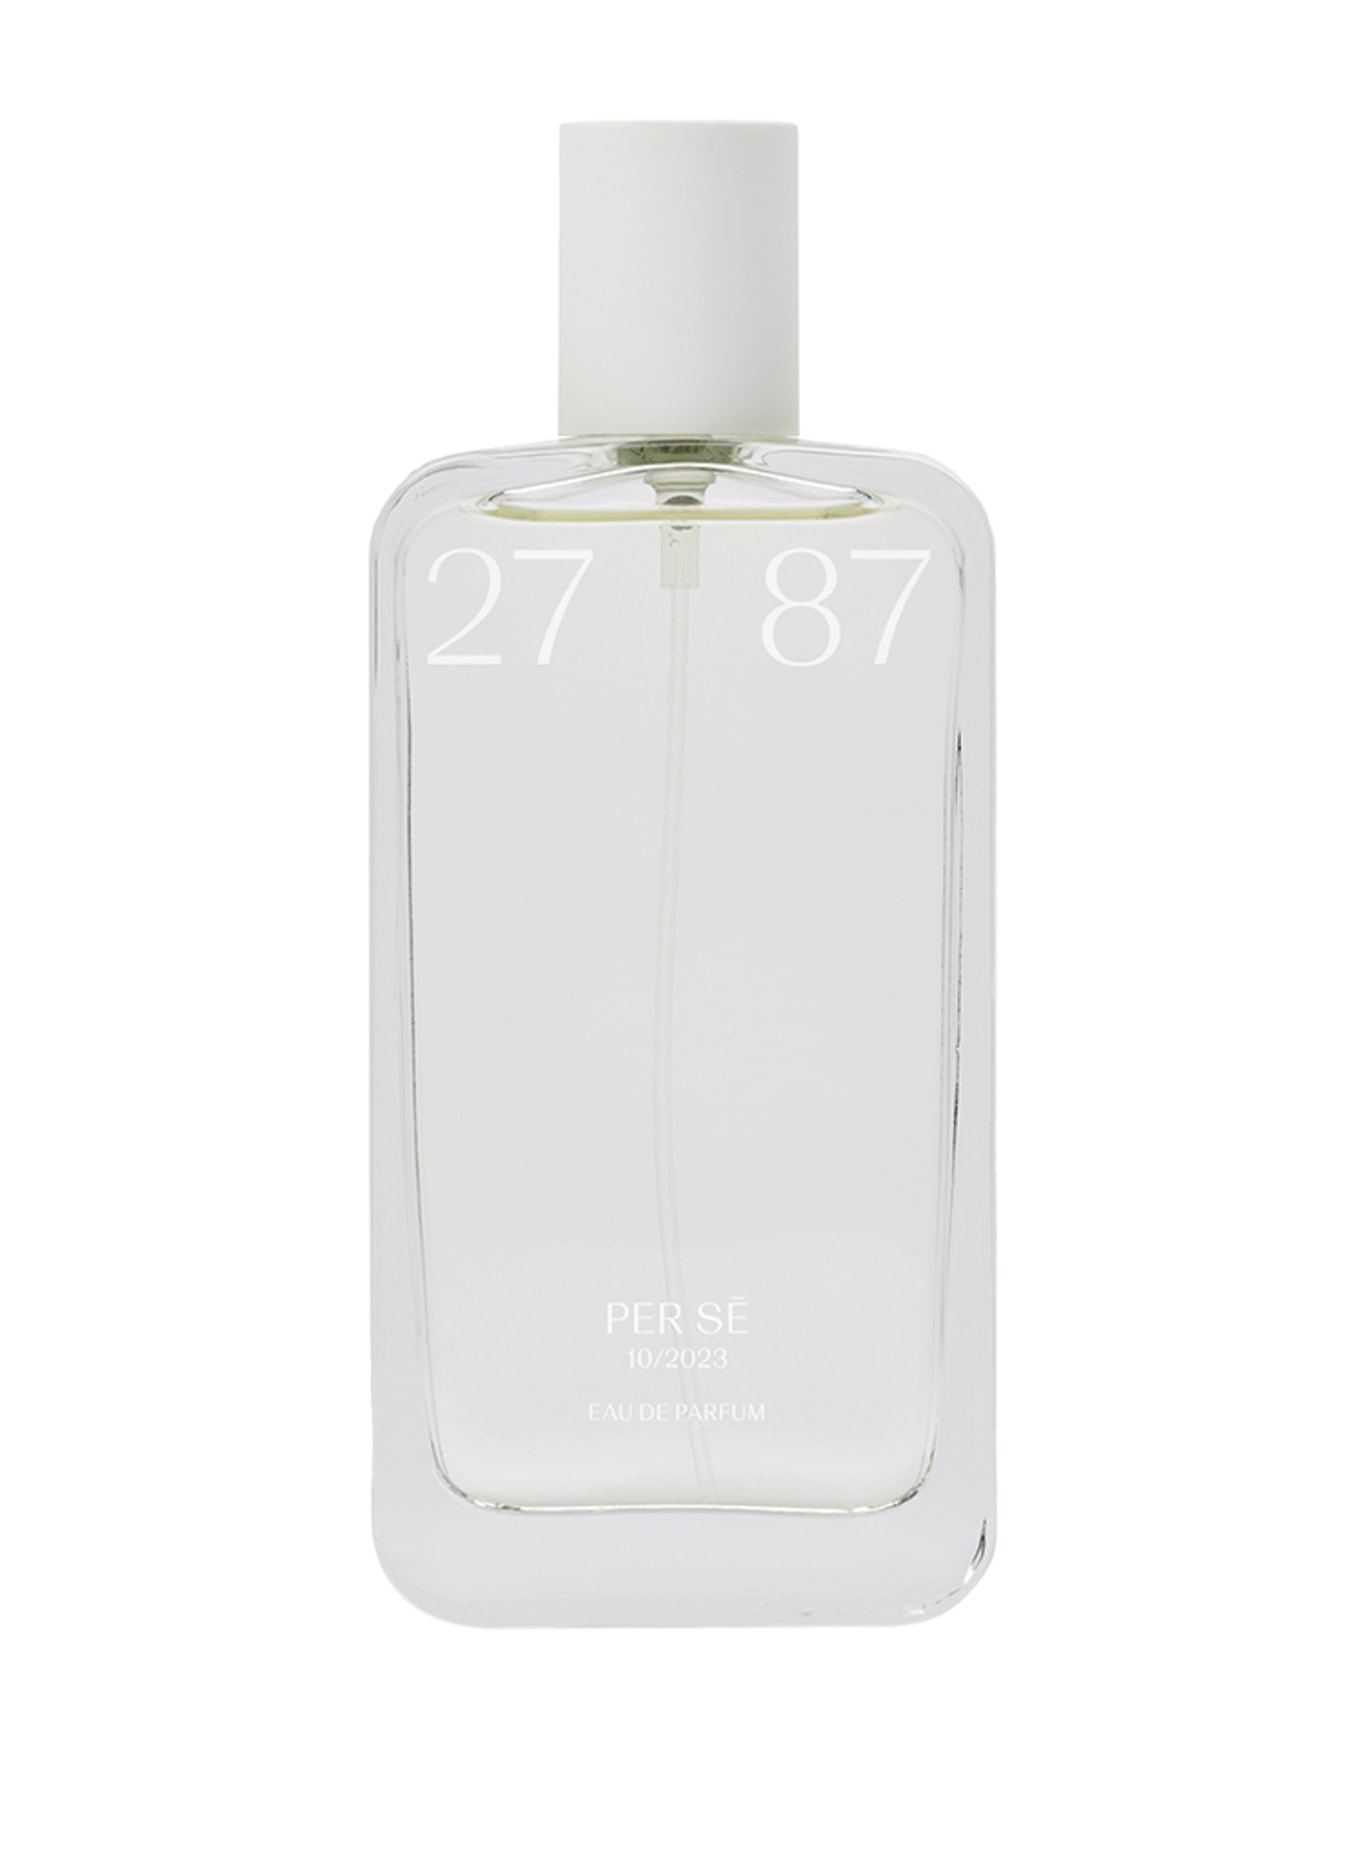 27 87 Perfumes PER SE (Obrázek 1)